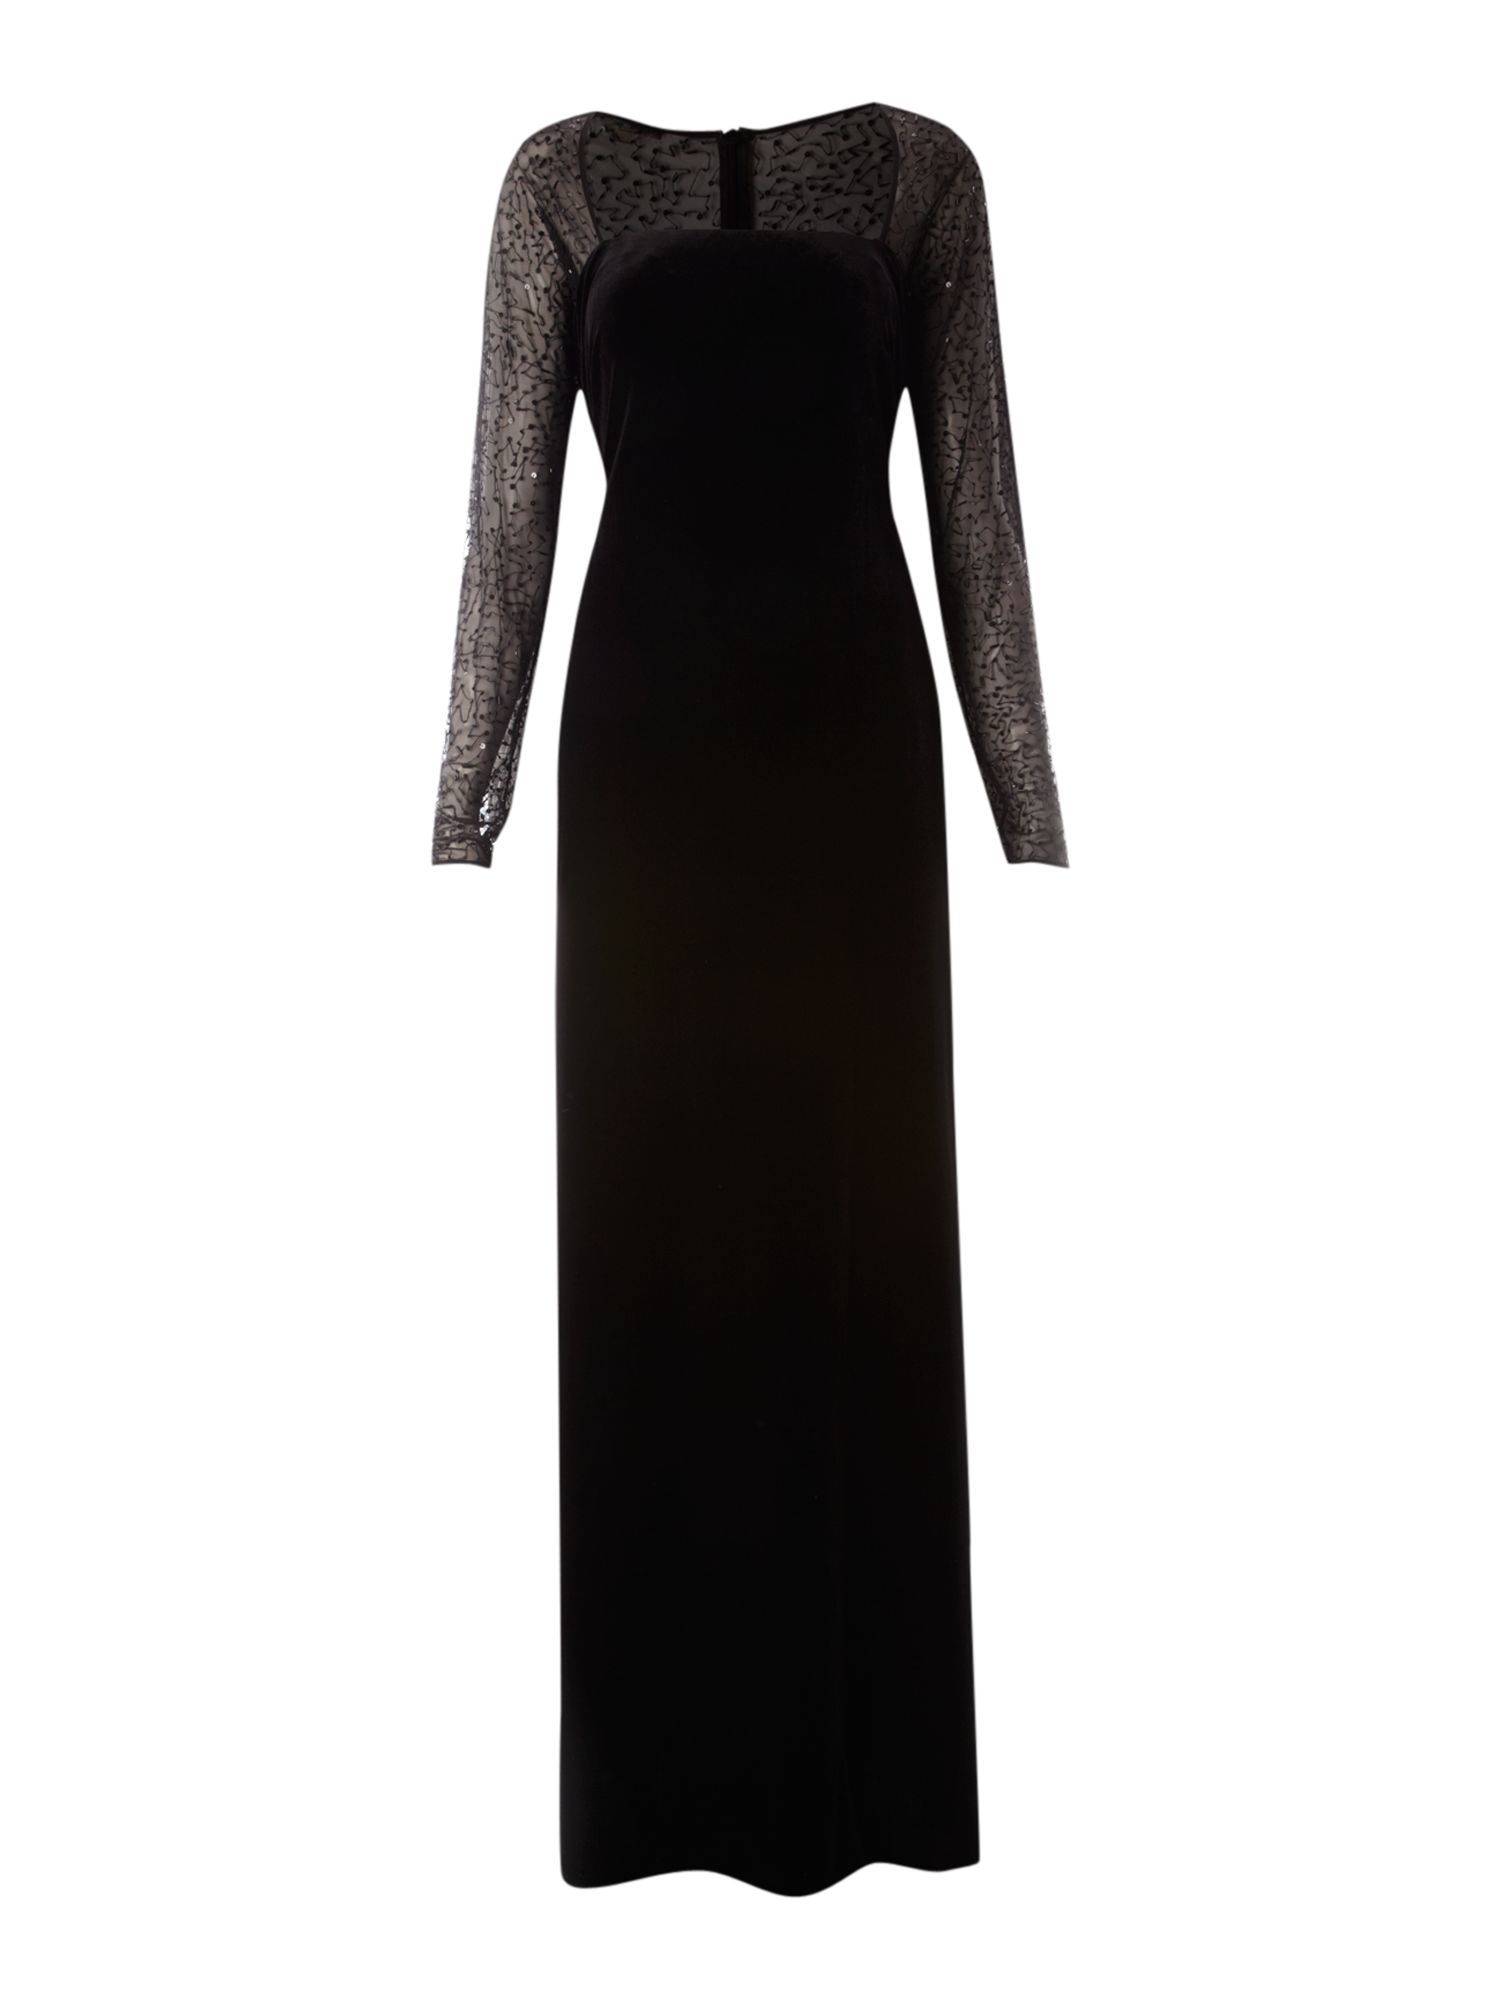 Js collections Long Sleeve Velvet Beaded Mesh Maxi Dress in Black | Lyst